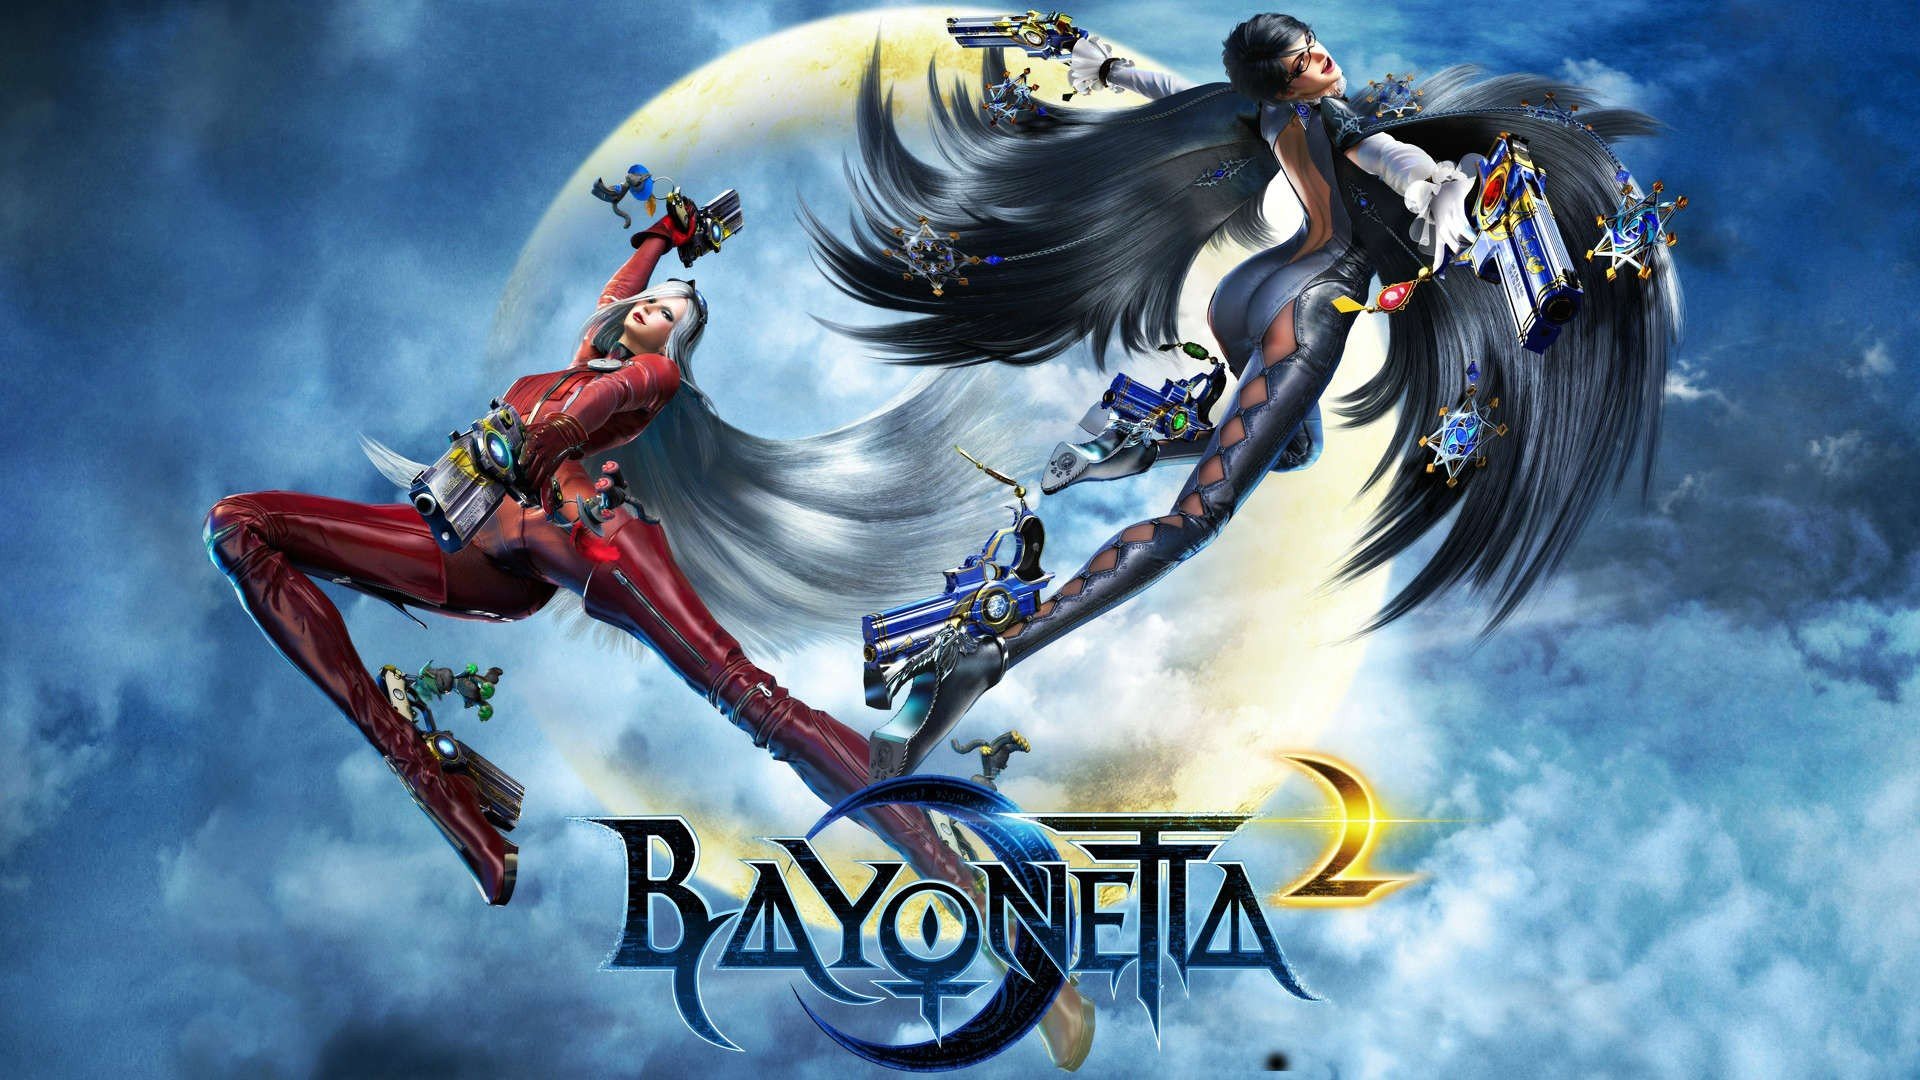 bayonetta 2pc download free